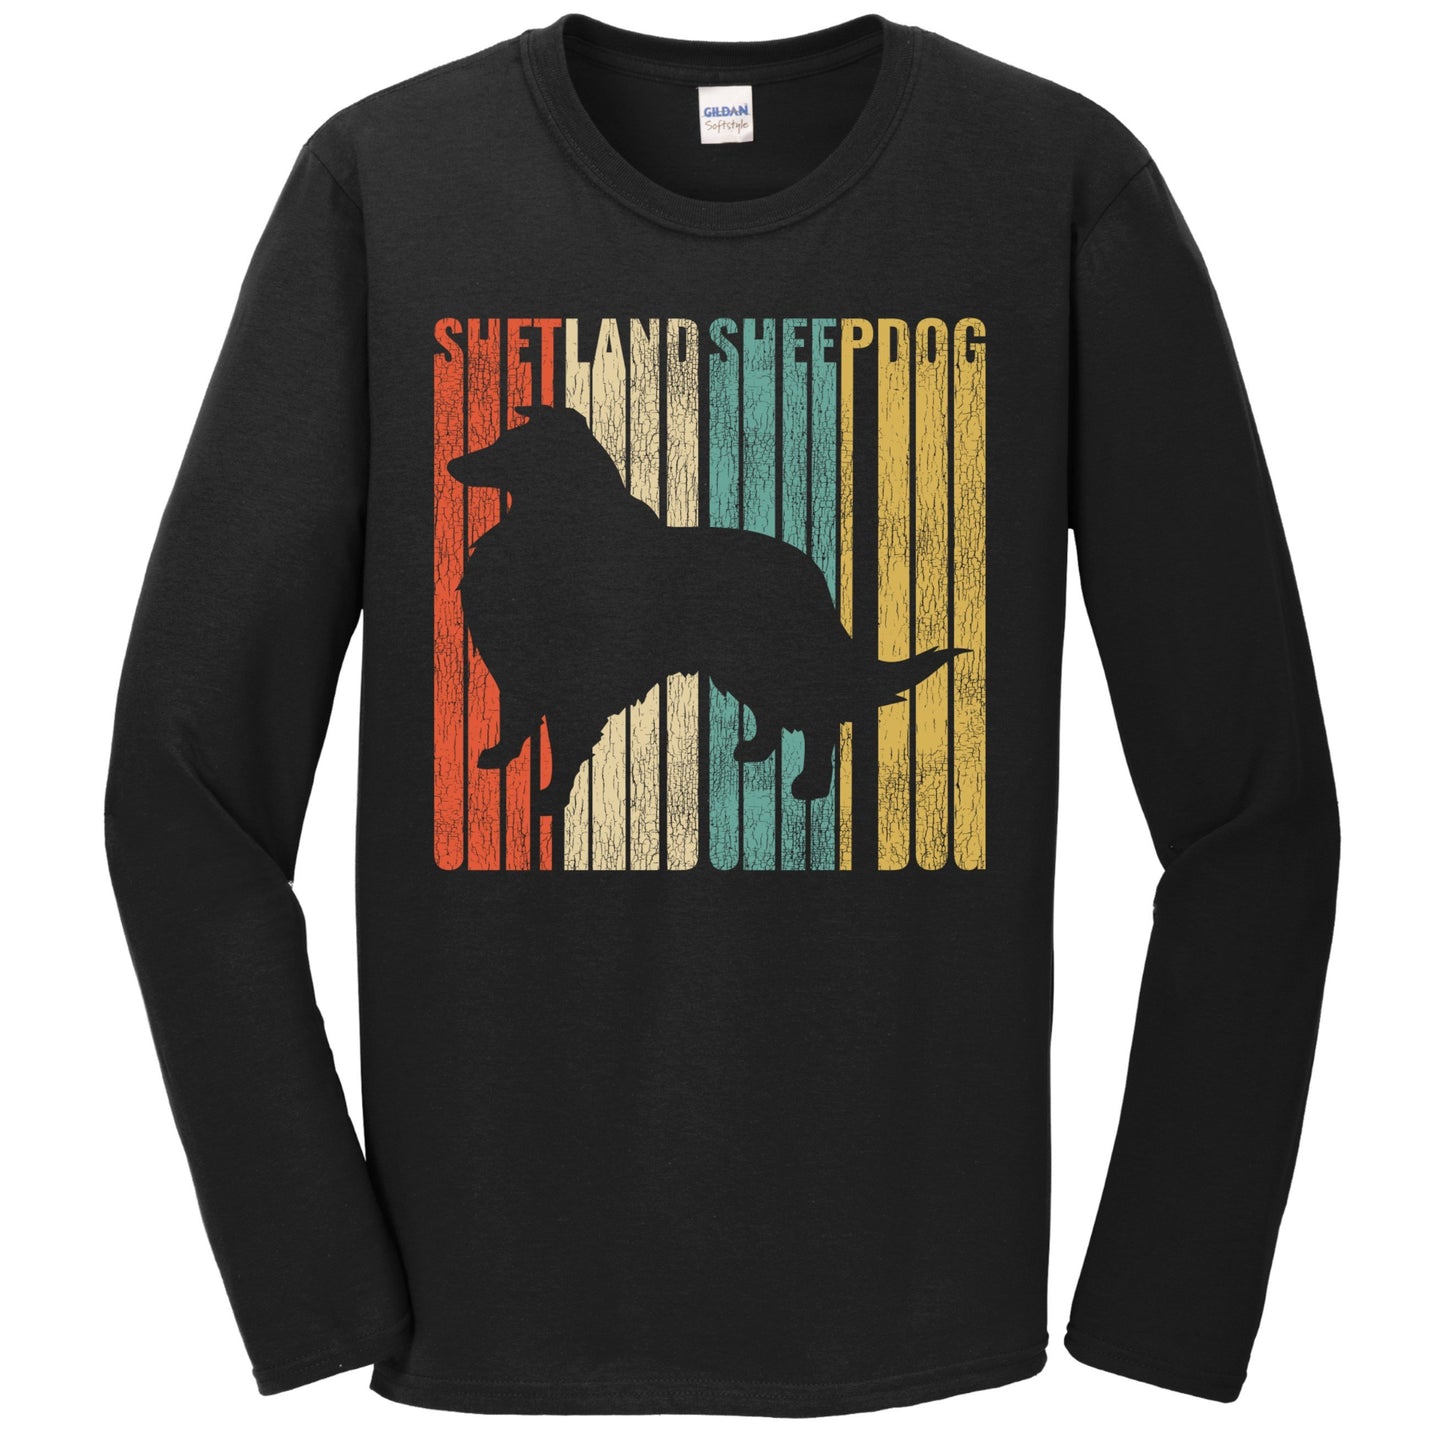 Retro 1970's Style Shetland Sheepdog Dog Silhouette Sheltie Cracked Distressed Long Sleeve T-Shirt